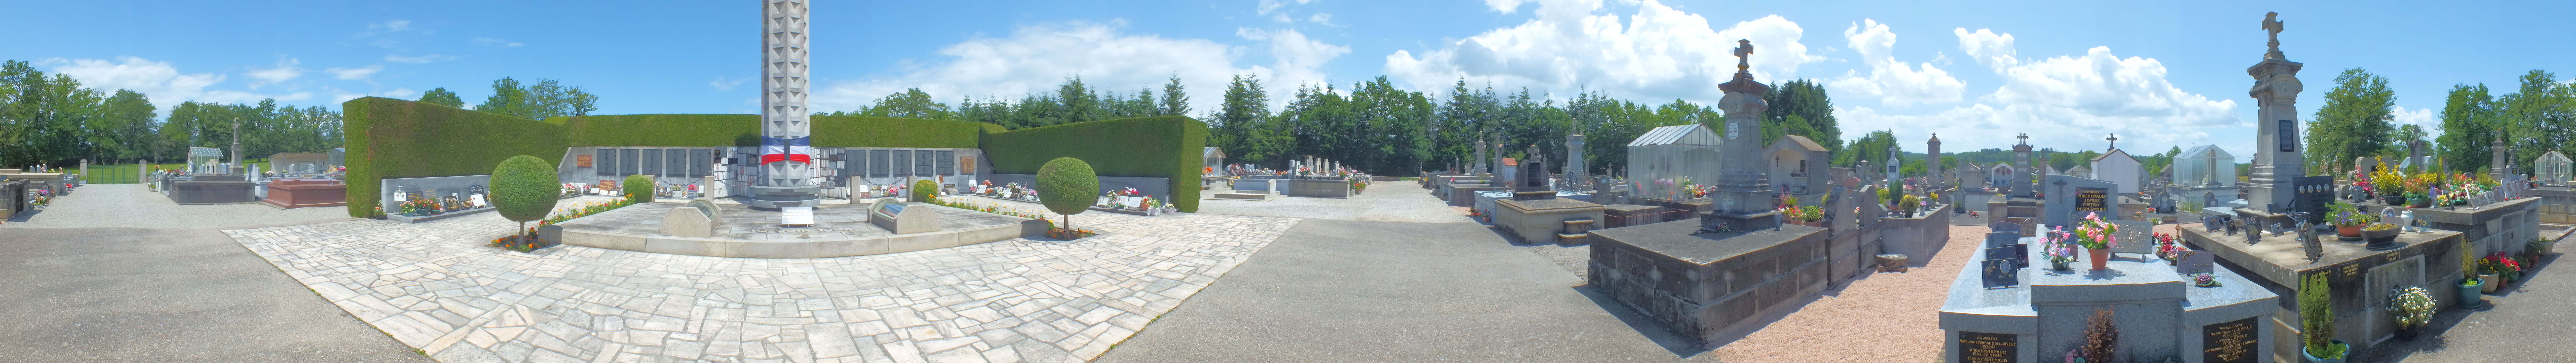 Panorama of Cemetery of Oradour-sur-Glane (360 degree view)